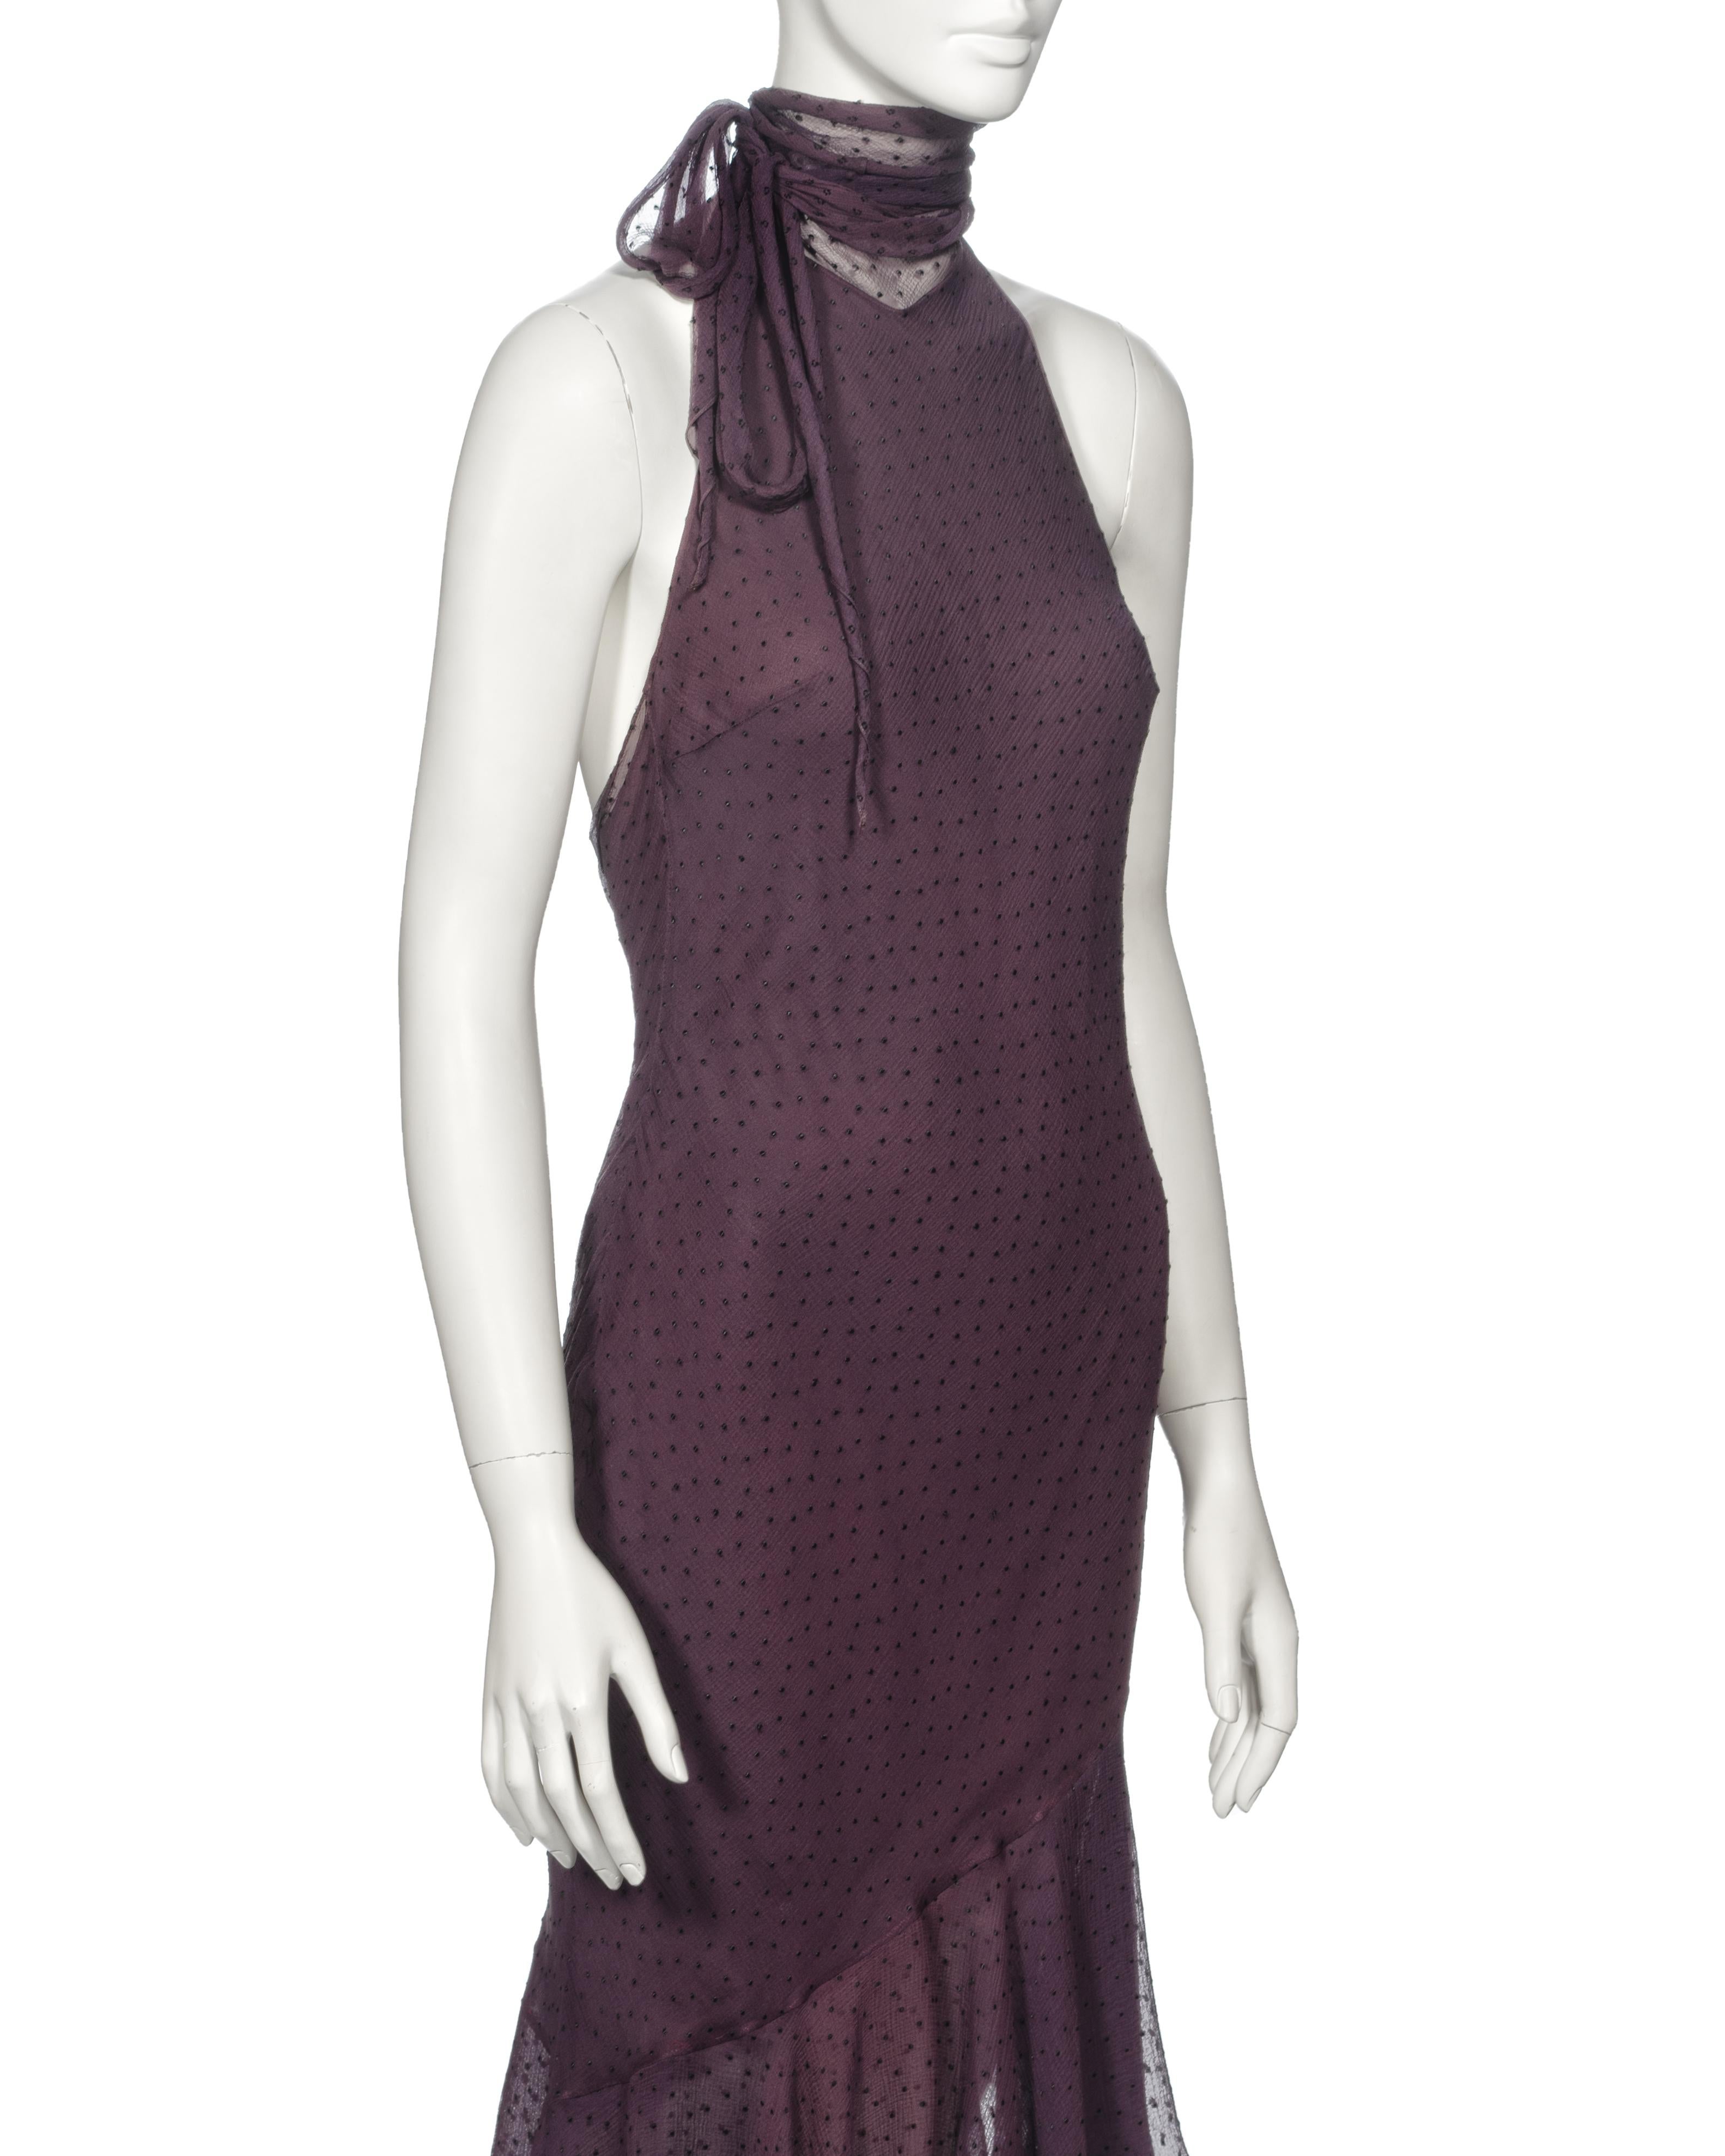 Women's Christian Dior by John Galliano Purple Silk Jacquard Cocktail Dress, fw 2000 For Sale